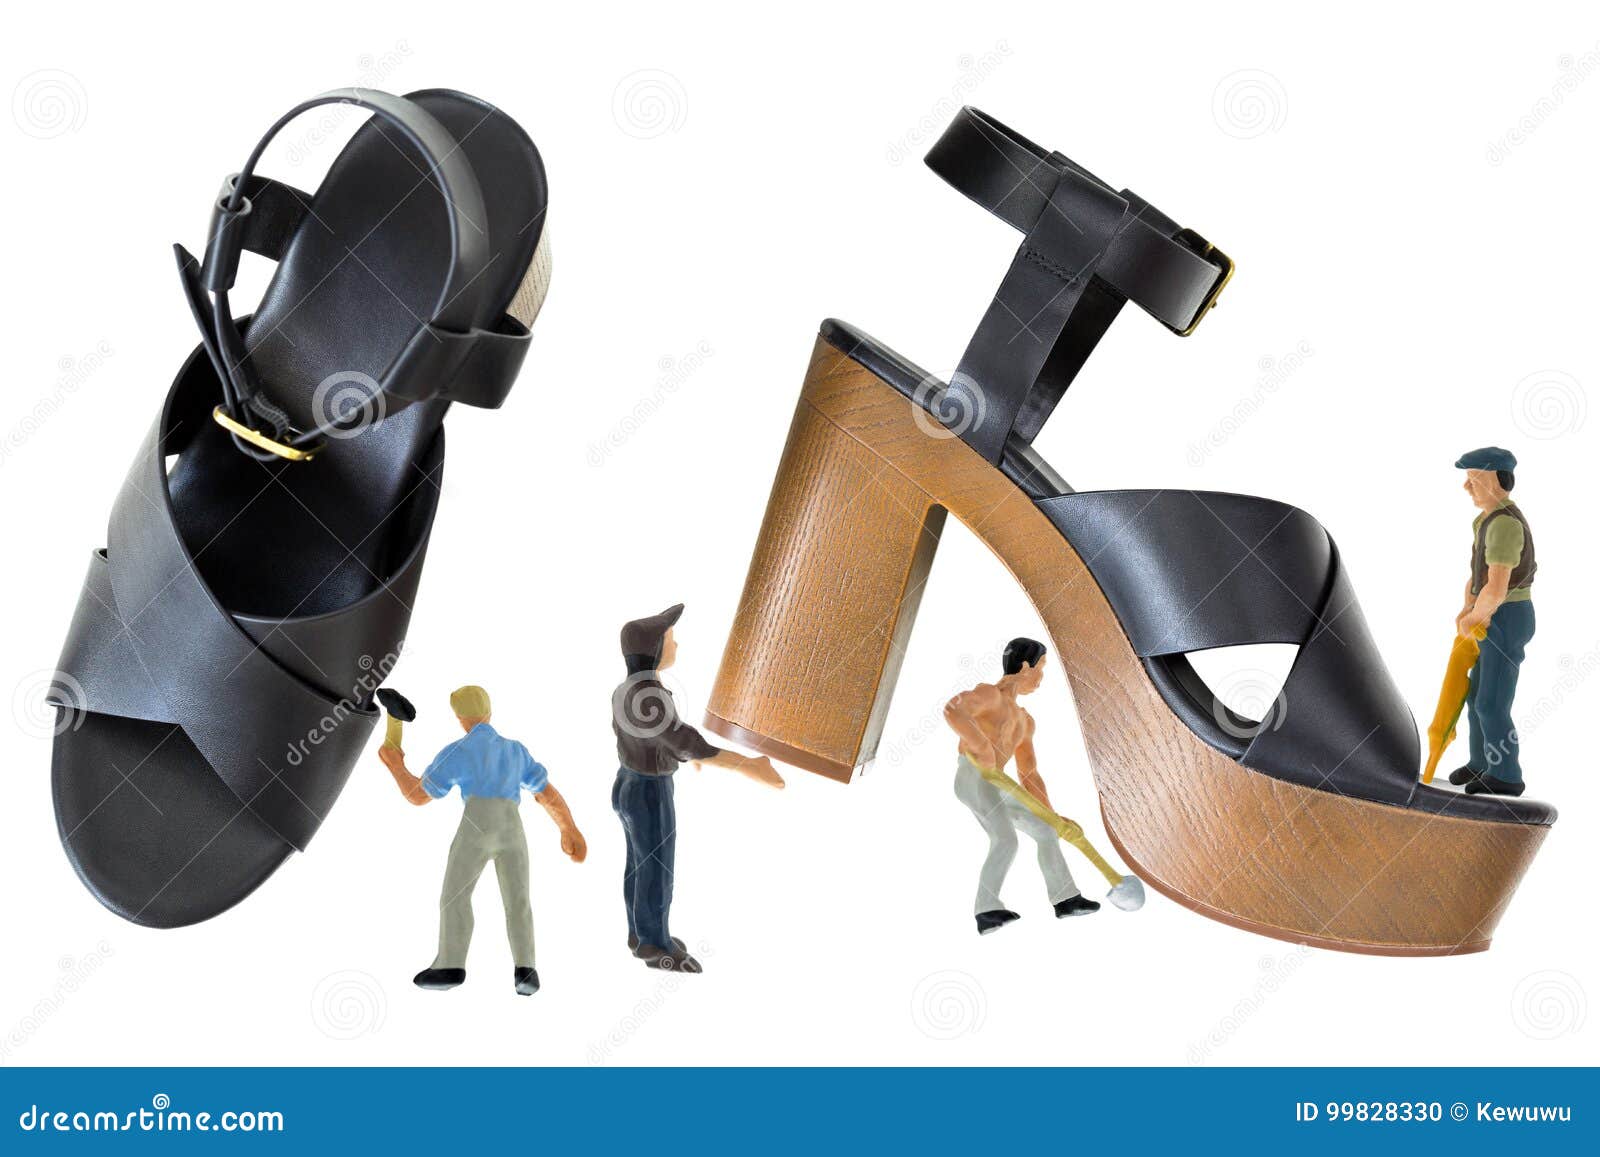 Elevator Shoes Men Increasing Height Shoes Make Men Taller Brown Wedding  Shoes